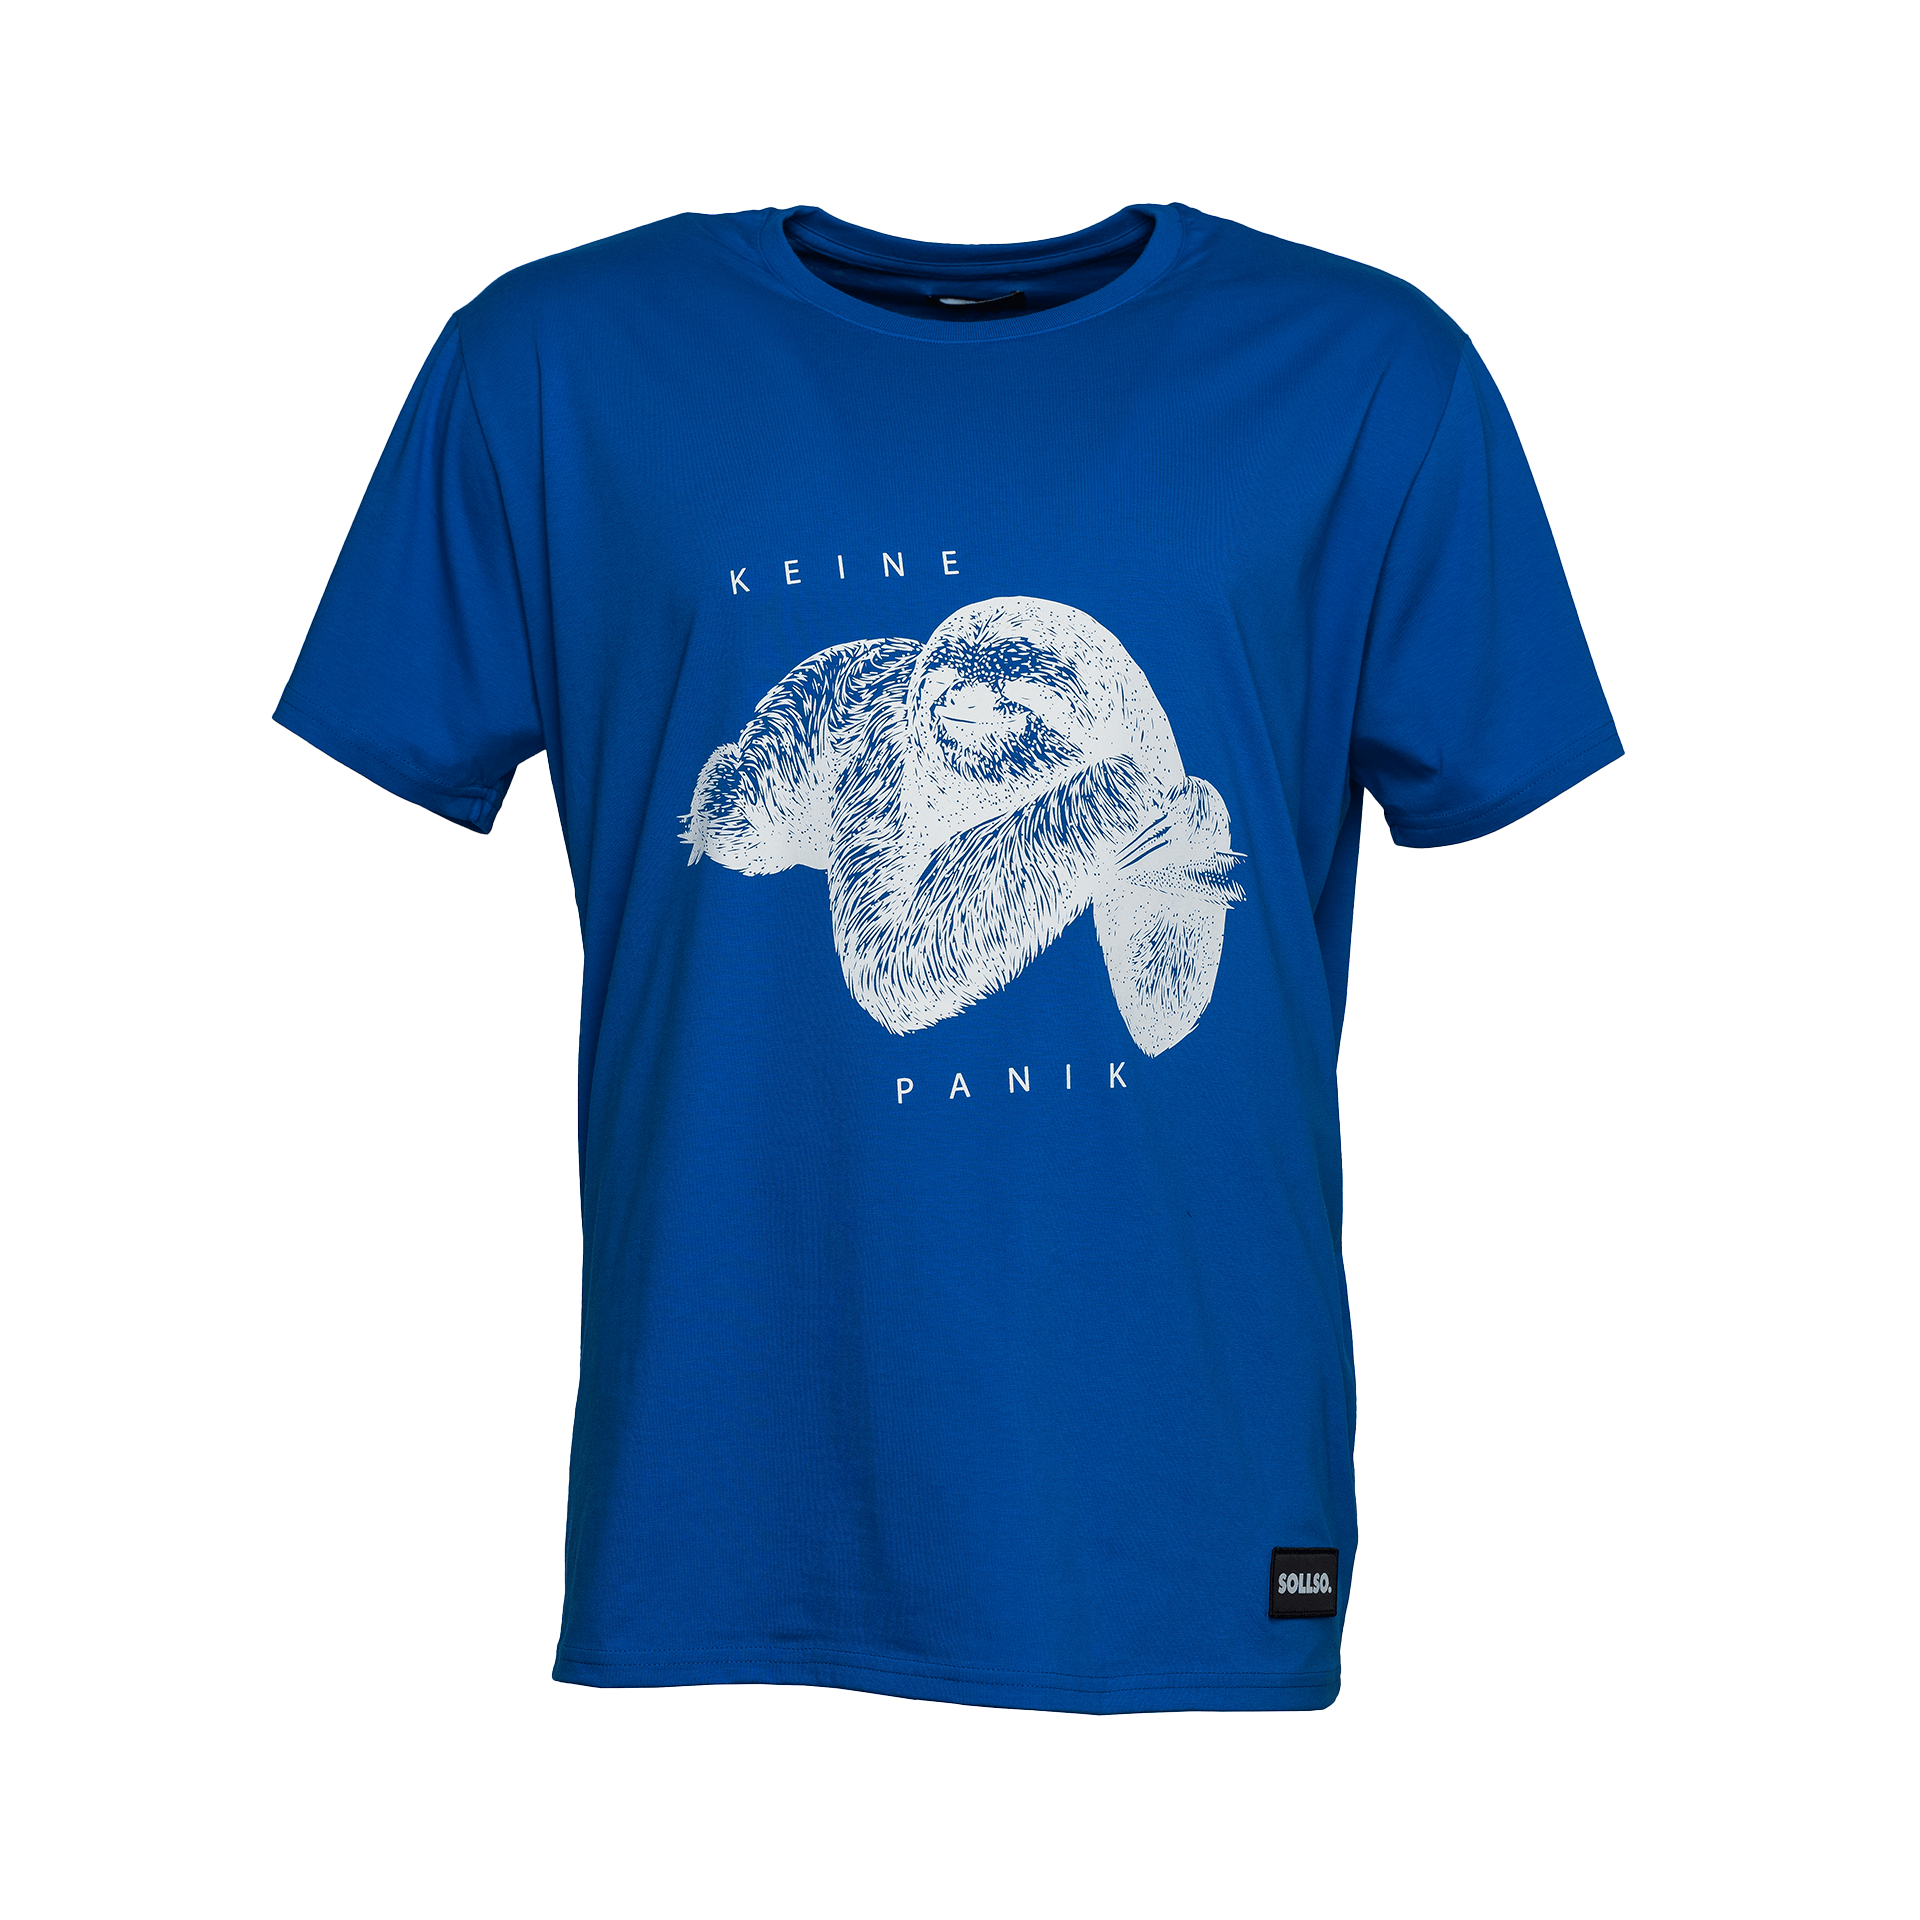 SOLLSO. T-Shirt "Keine Panik Faultier", Farbe Ocean Blue, Größe 9XL